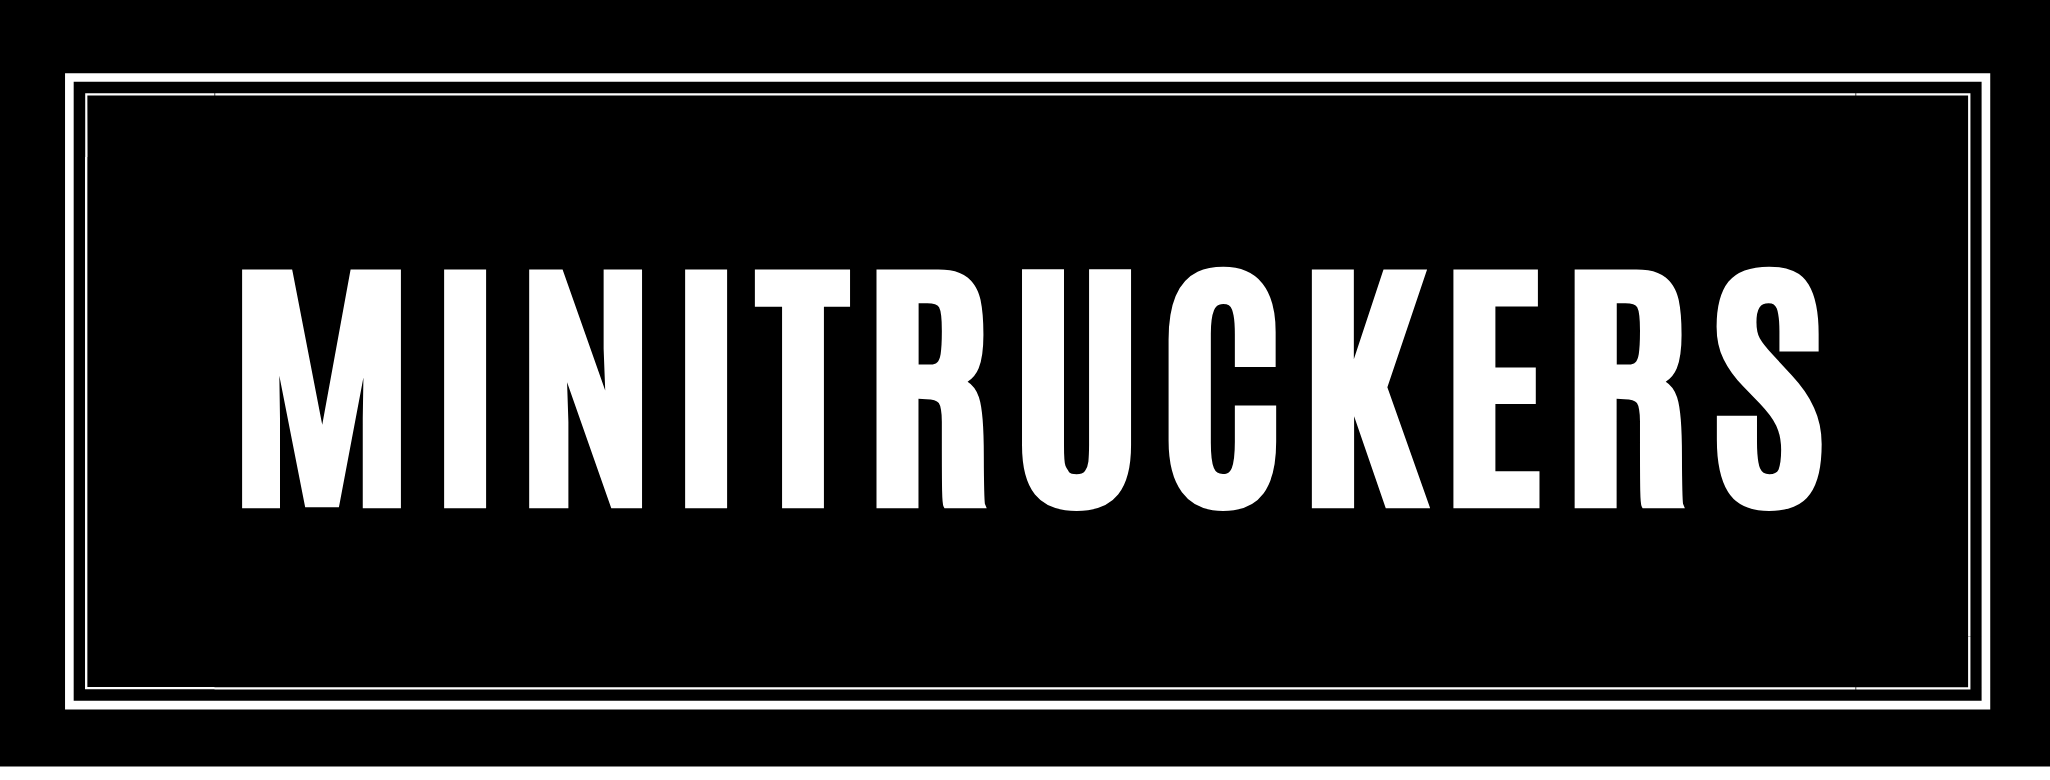 Truck merken stickers